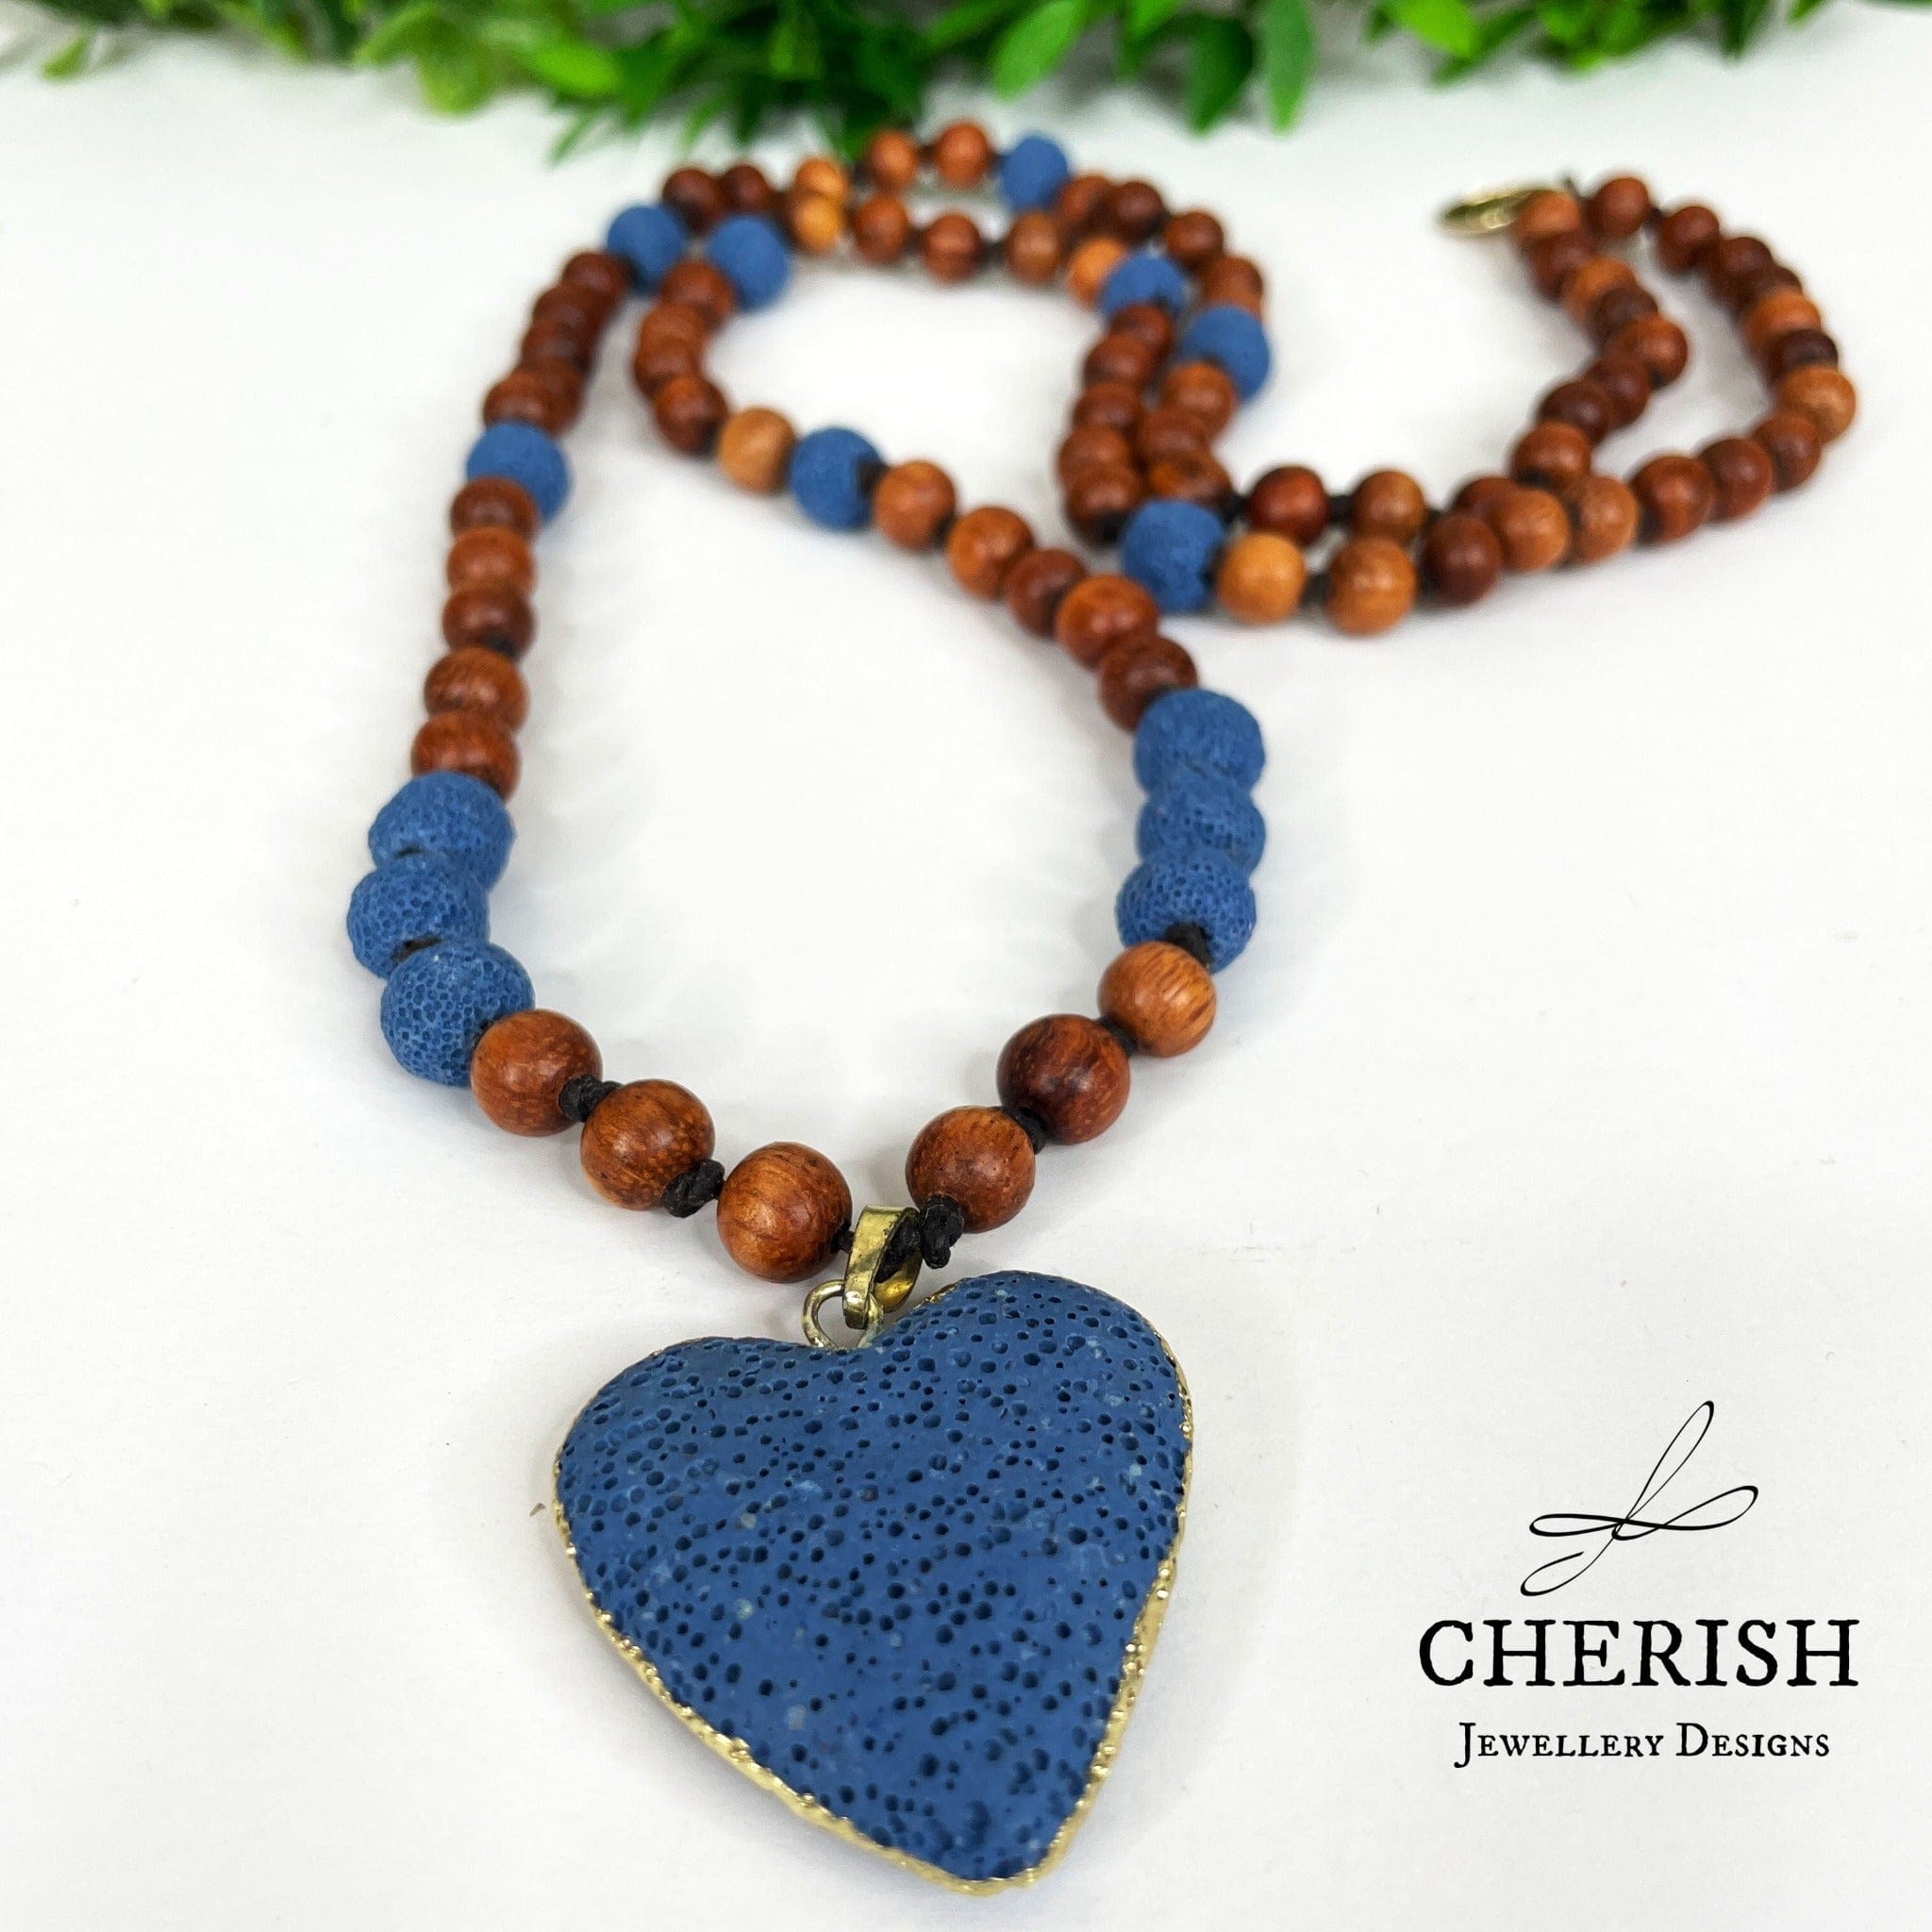 Cherish Jewellery Designs Handmade Jewellery Necklace Lava Stone Hand Knotted Timber Wood Blue Gifts Australia